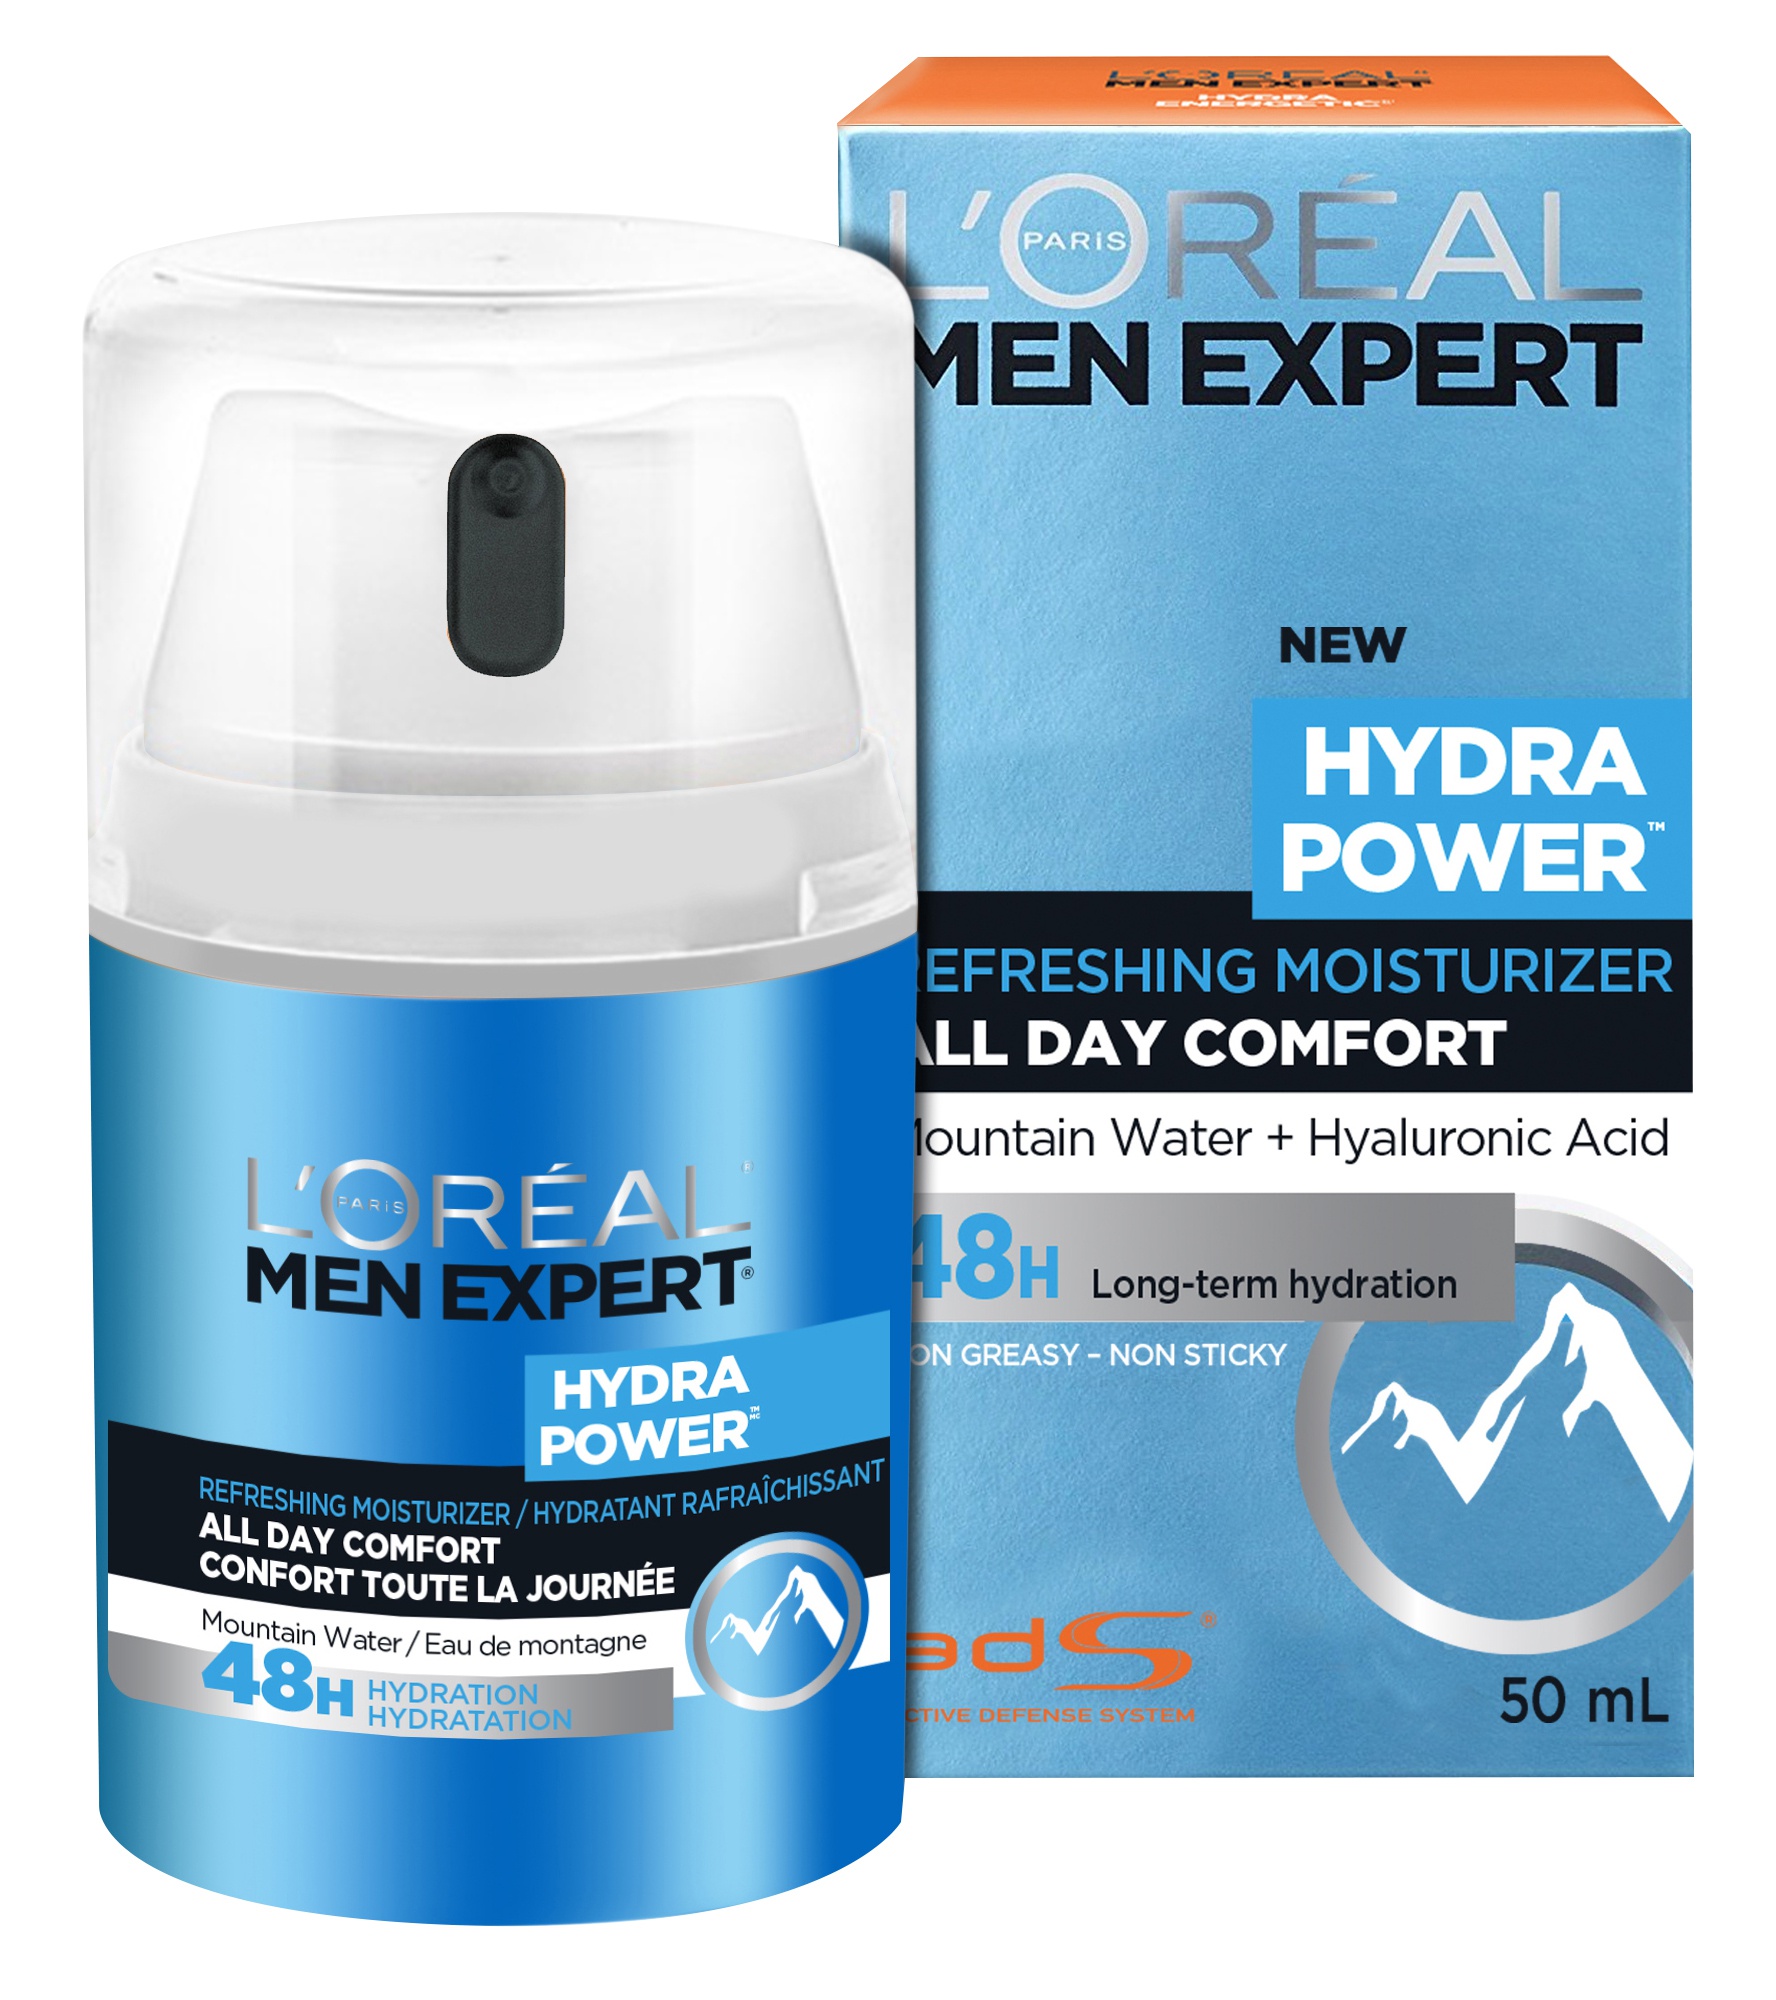 L'Oreal Men Expert Hydra Power Moisturizer